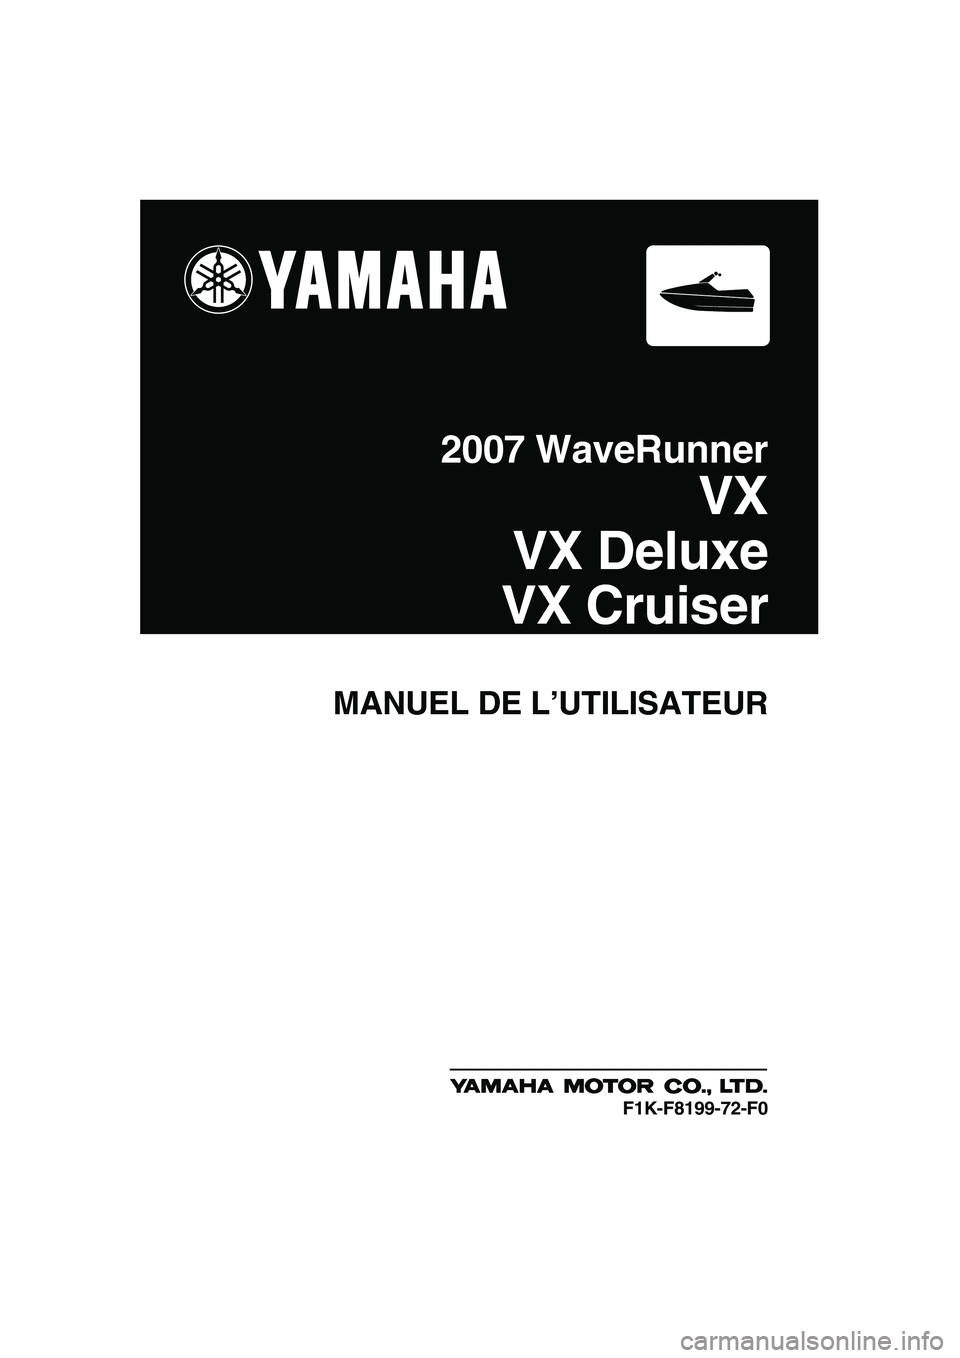 YAMAHA VX SPORT 2007  Notices Demploi (in French) MANUEL DE L’UTILISATEUR
2007 WaveRunner
VX
VX Deluxe
VX Cruiser
F1K-F8199-72-F0
UF1K72F0.book  Page 1  Wednesday, August 2, 2006  5:56 PM 